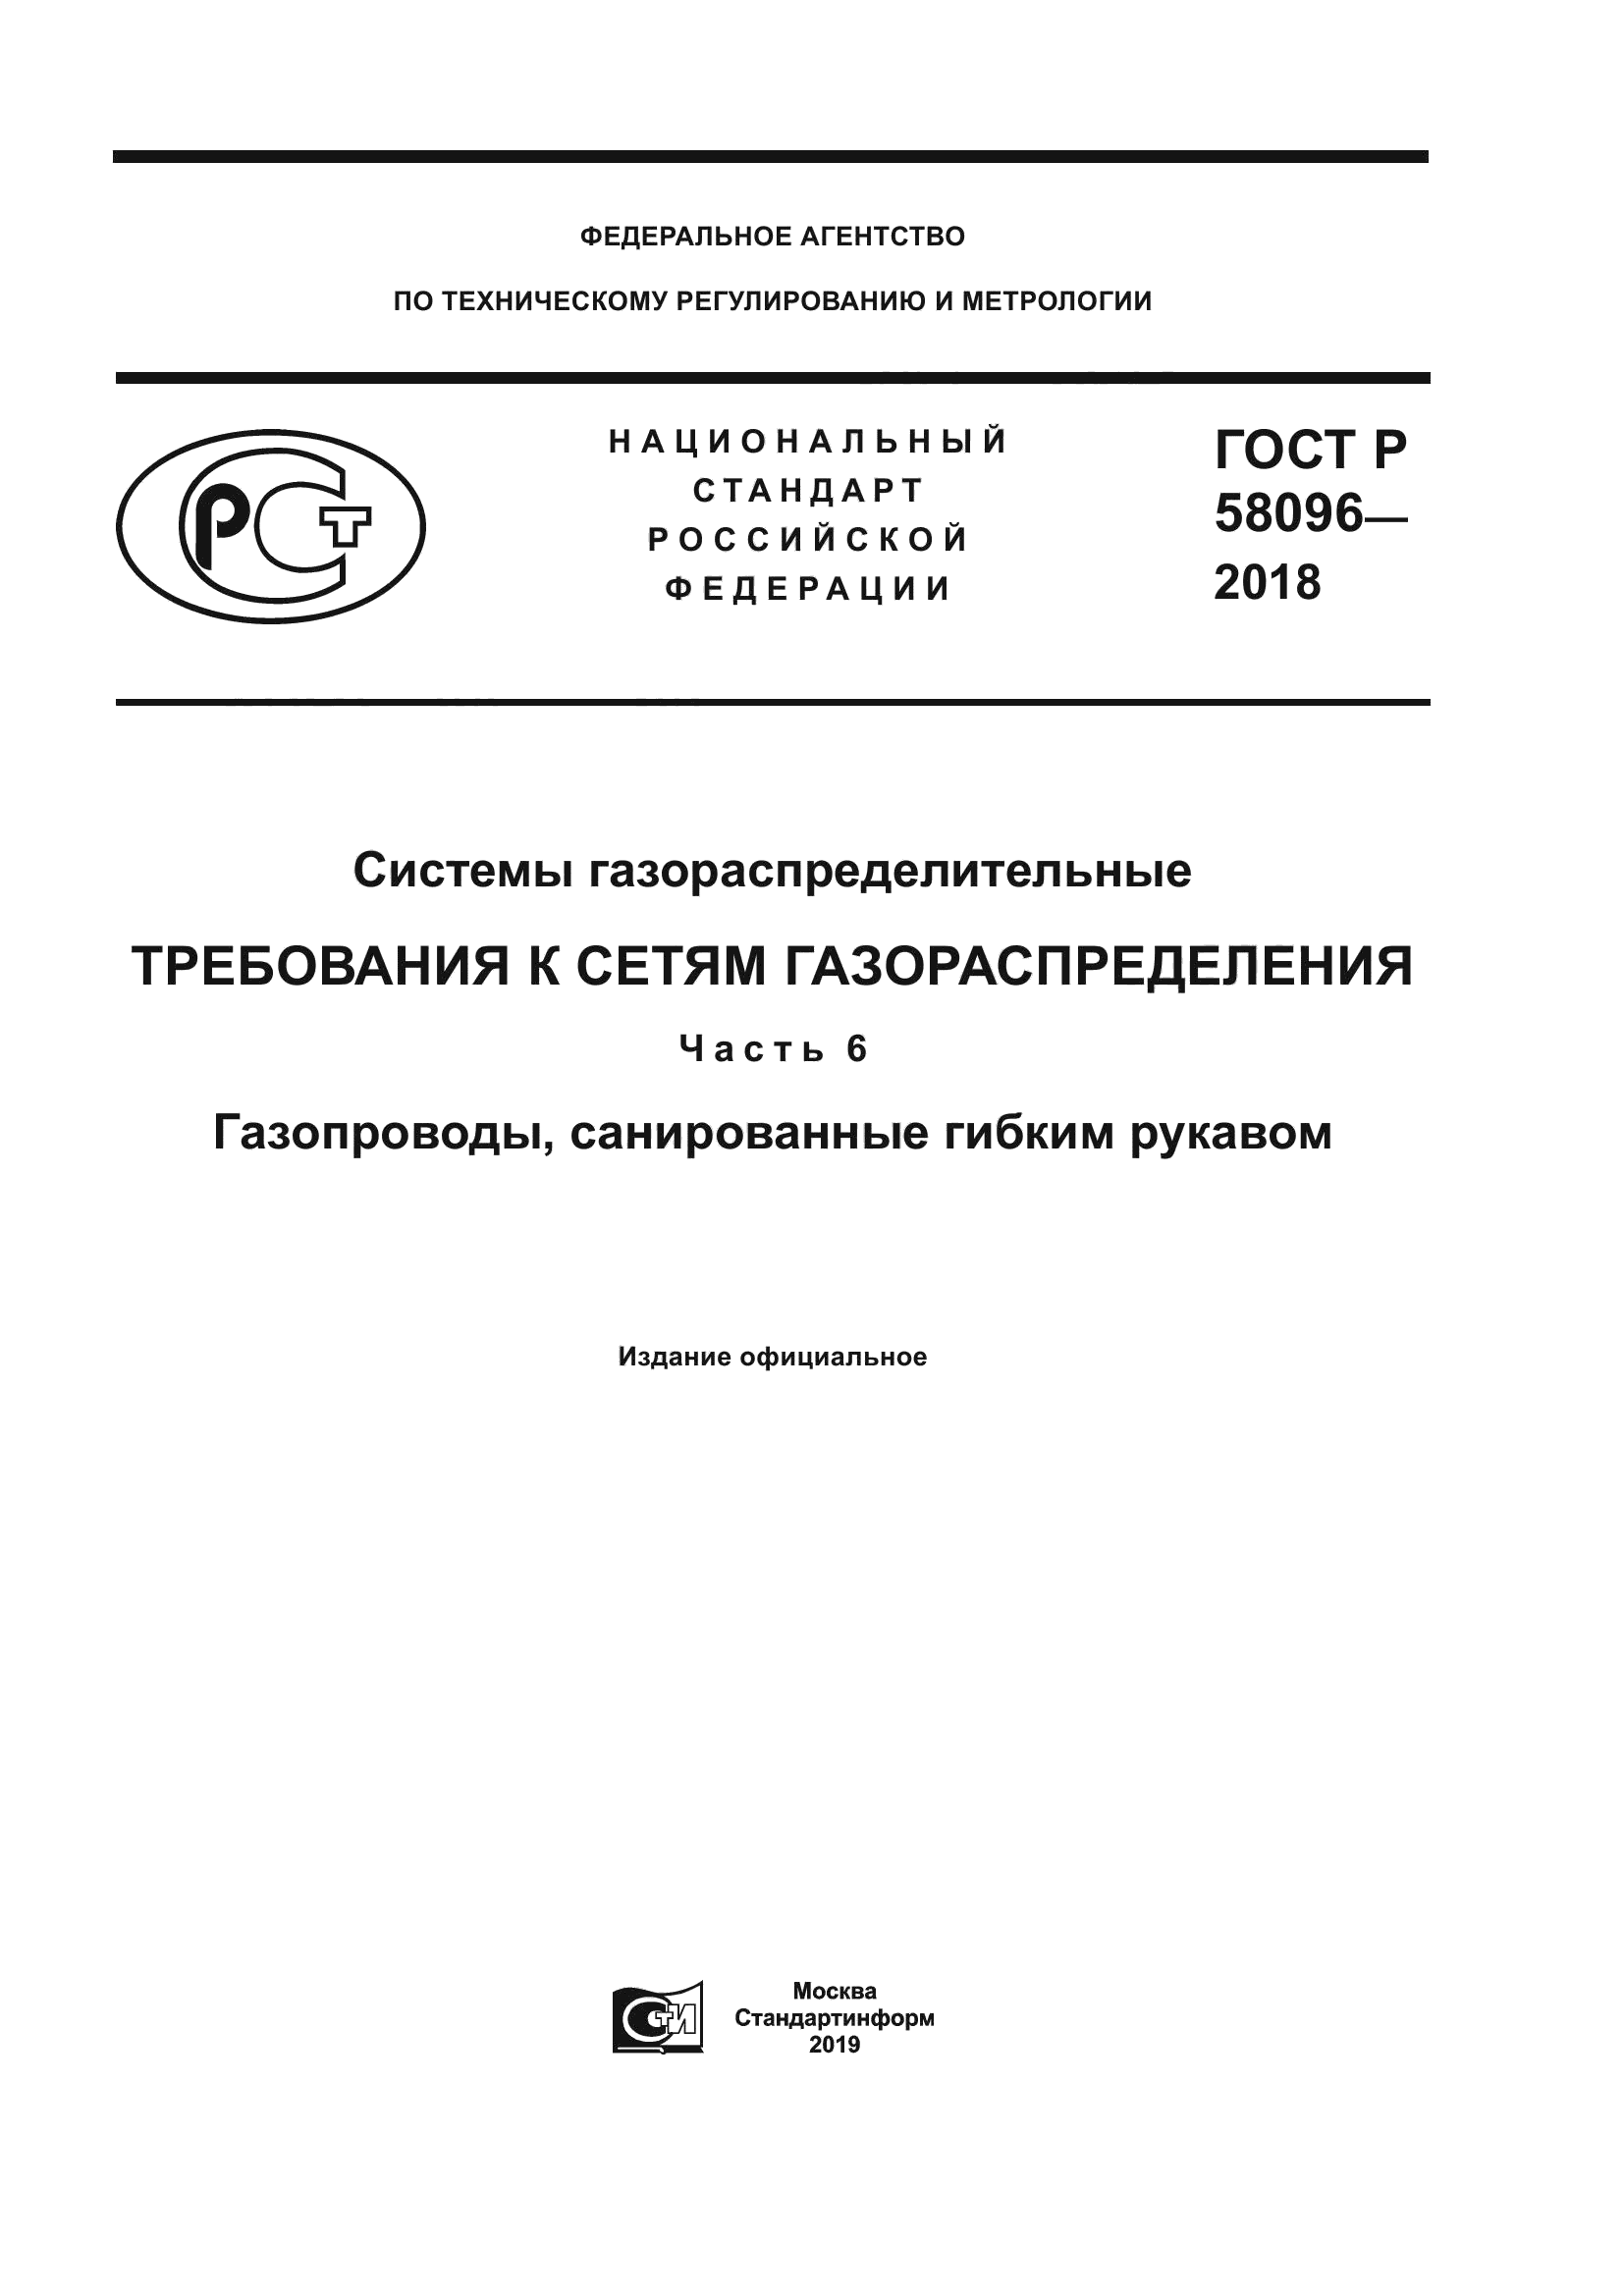 ГОСТ Р 58096-2018